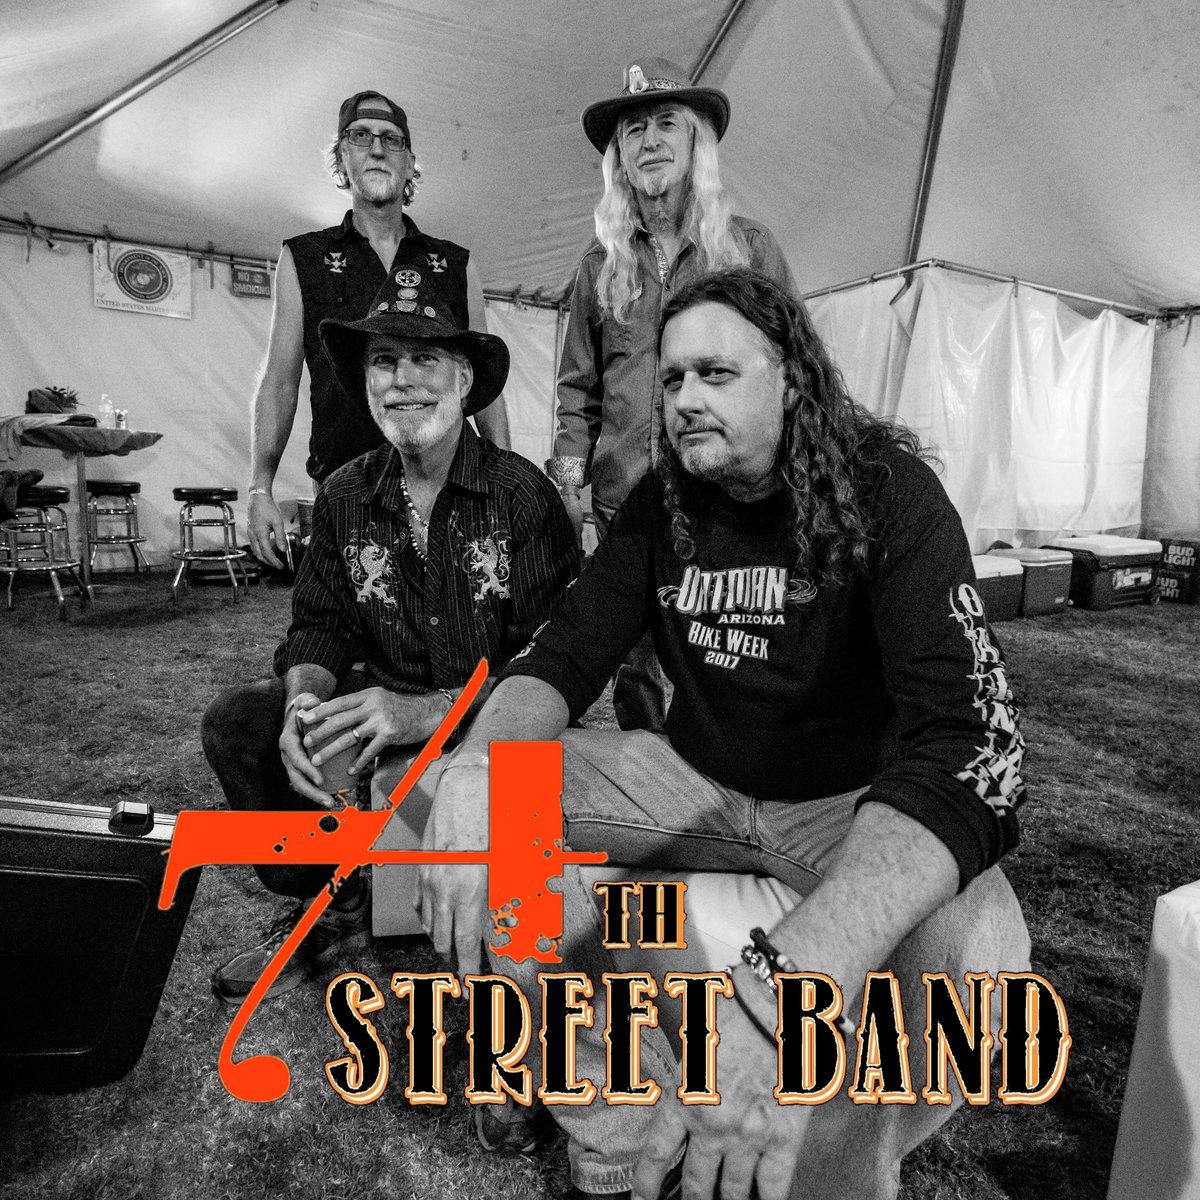 74th Street Band